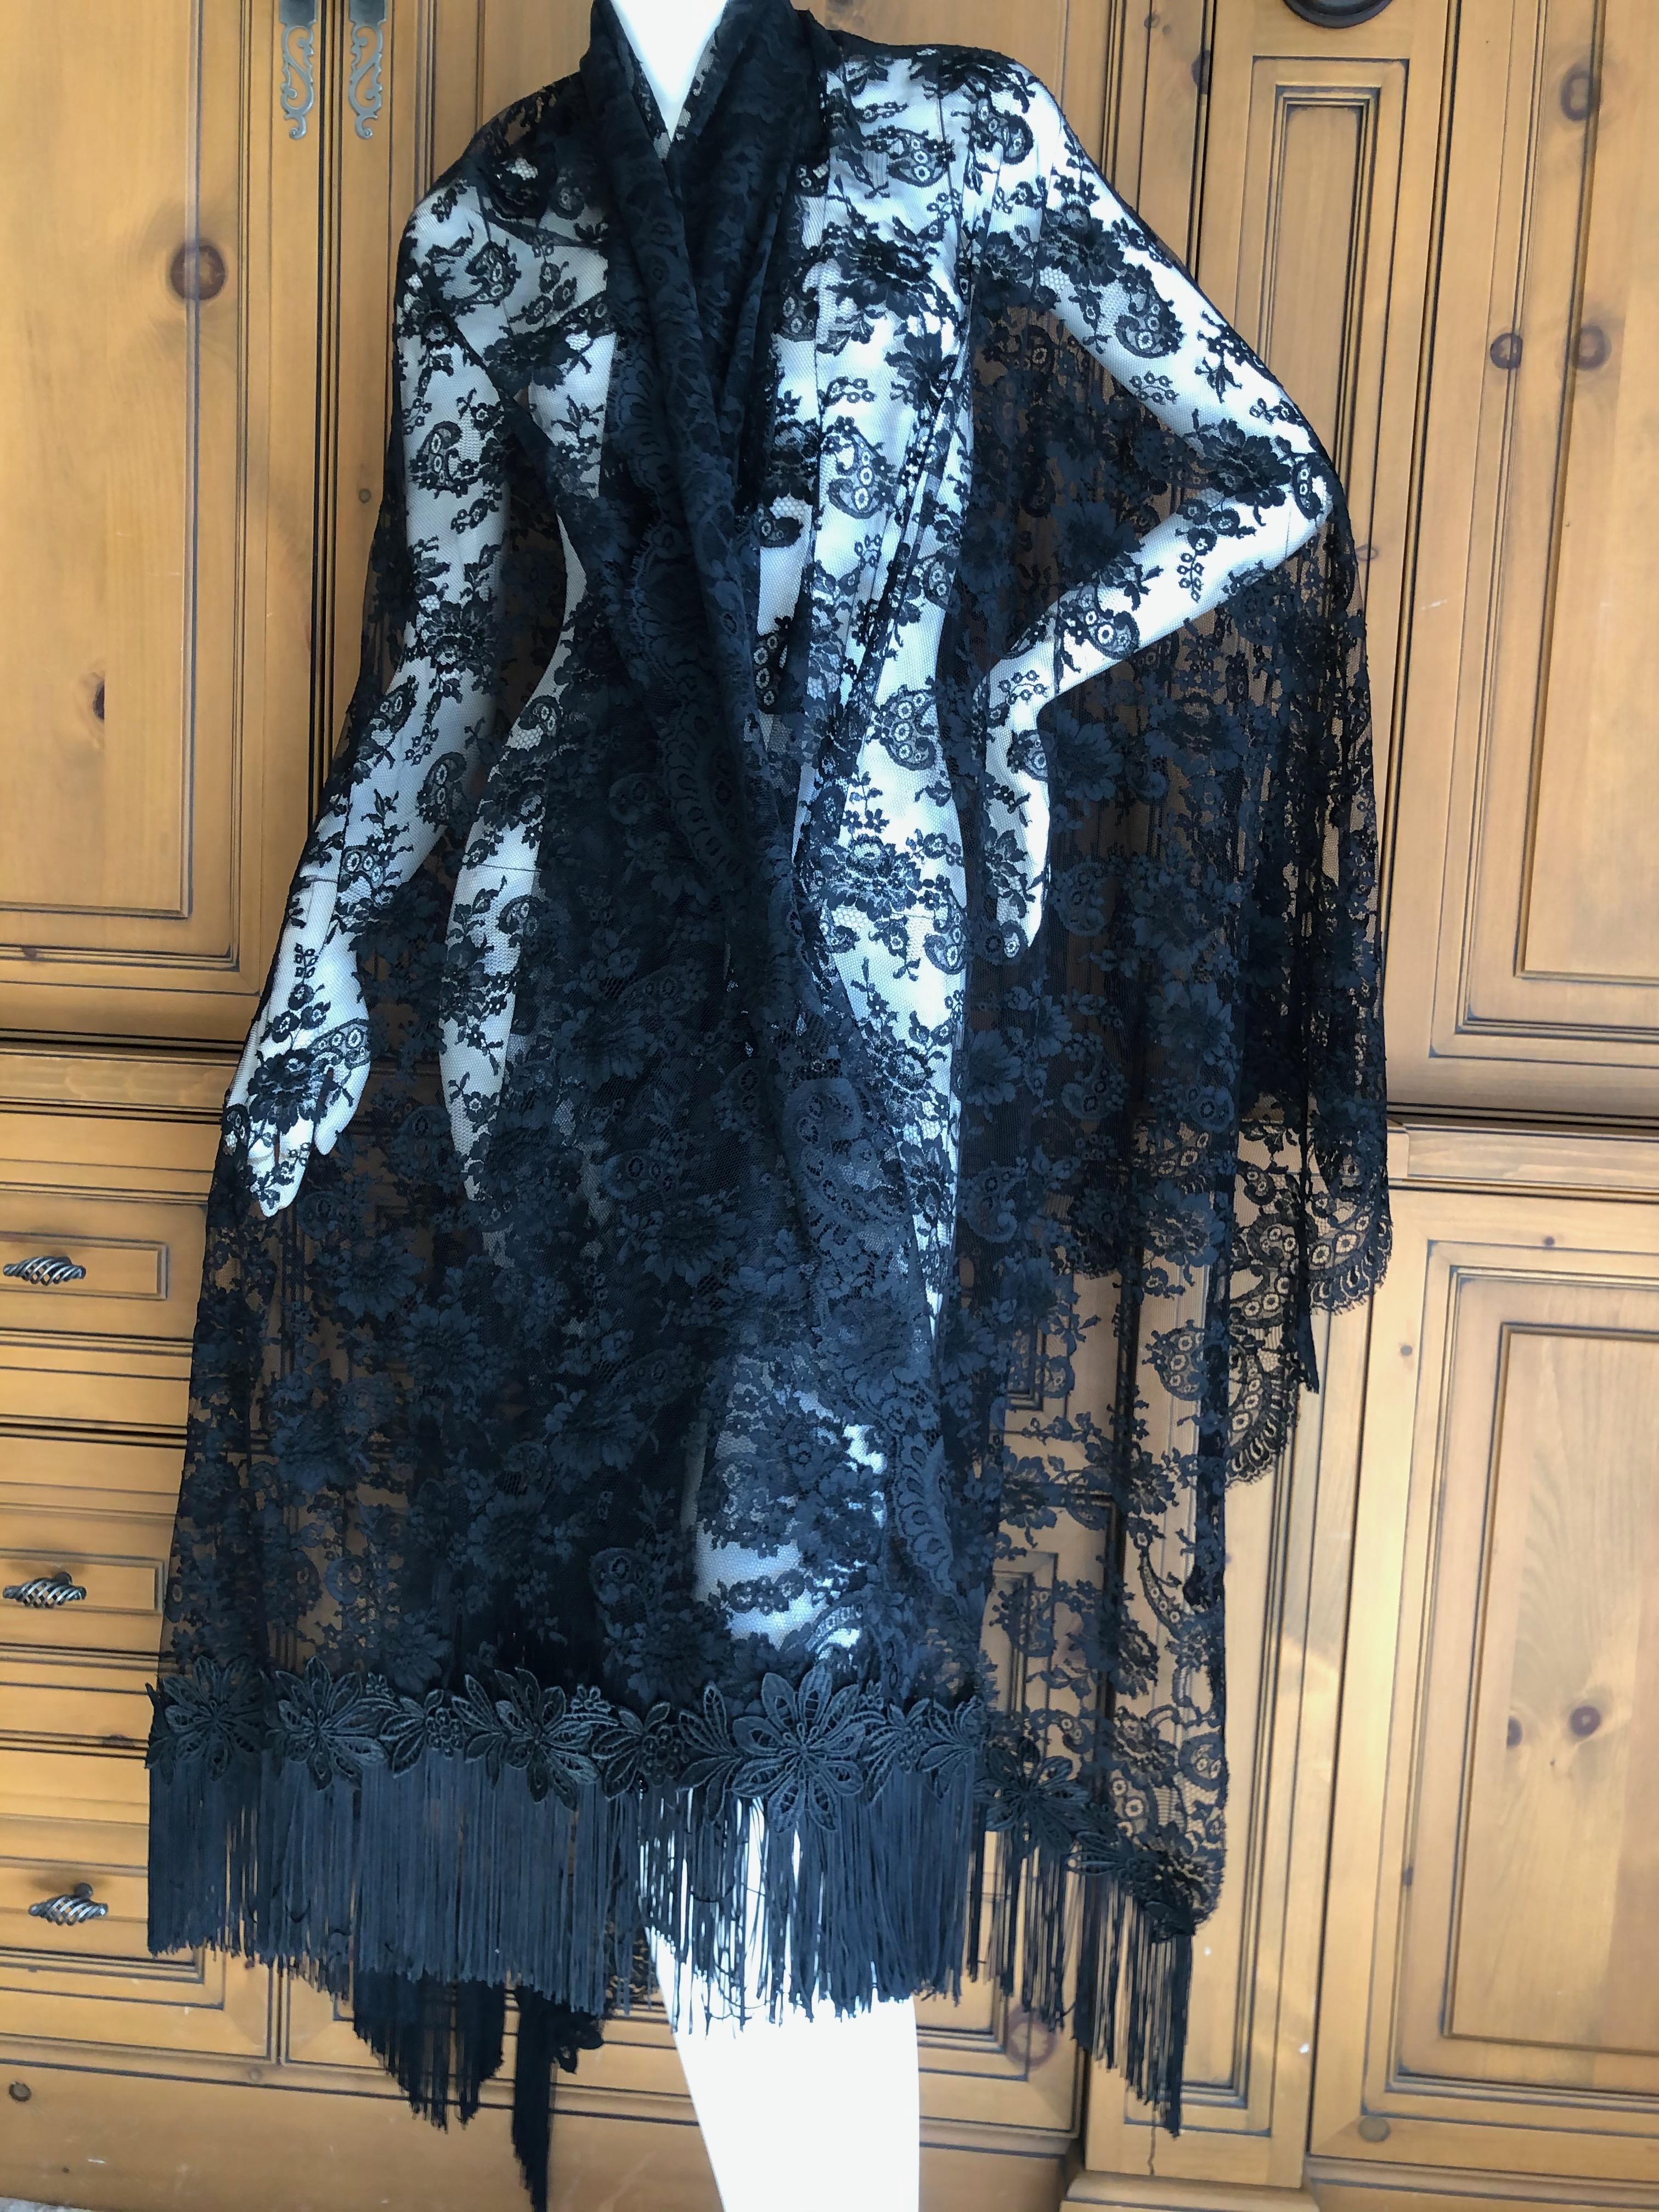 black lace shawl